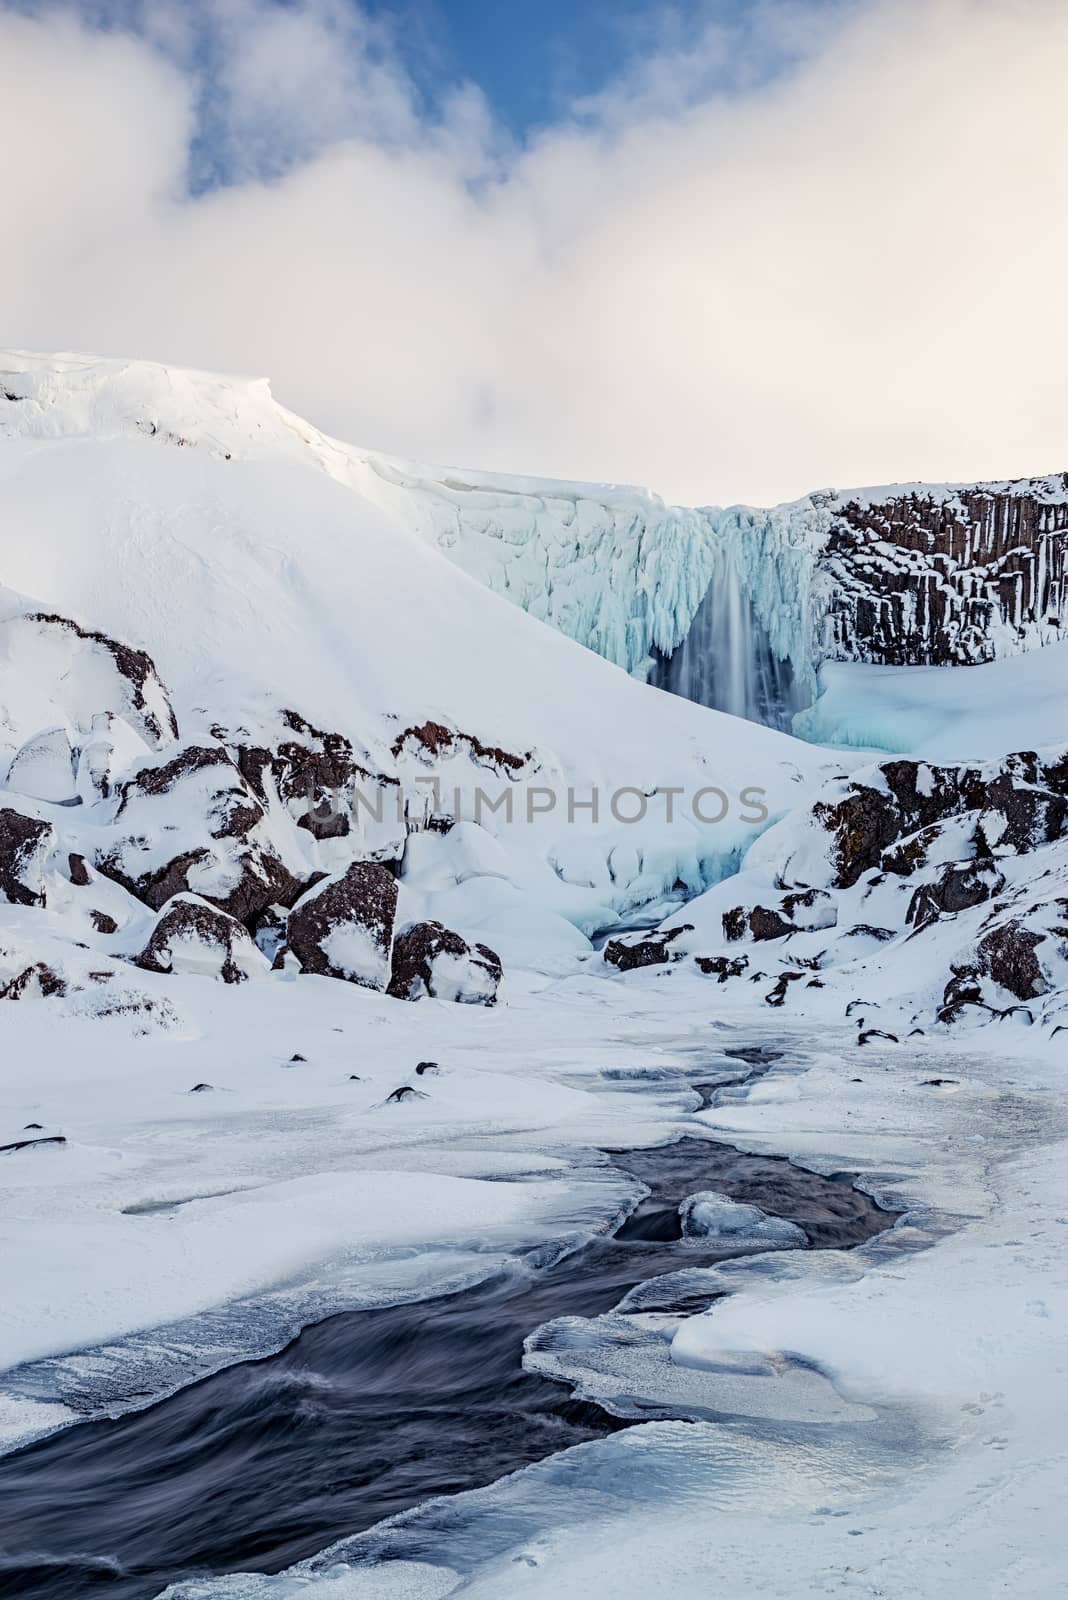 Iced Svodufoss waterfall in Snaefellsnes peninsula, Iceland